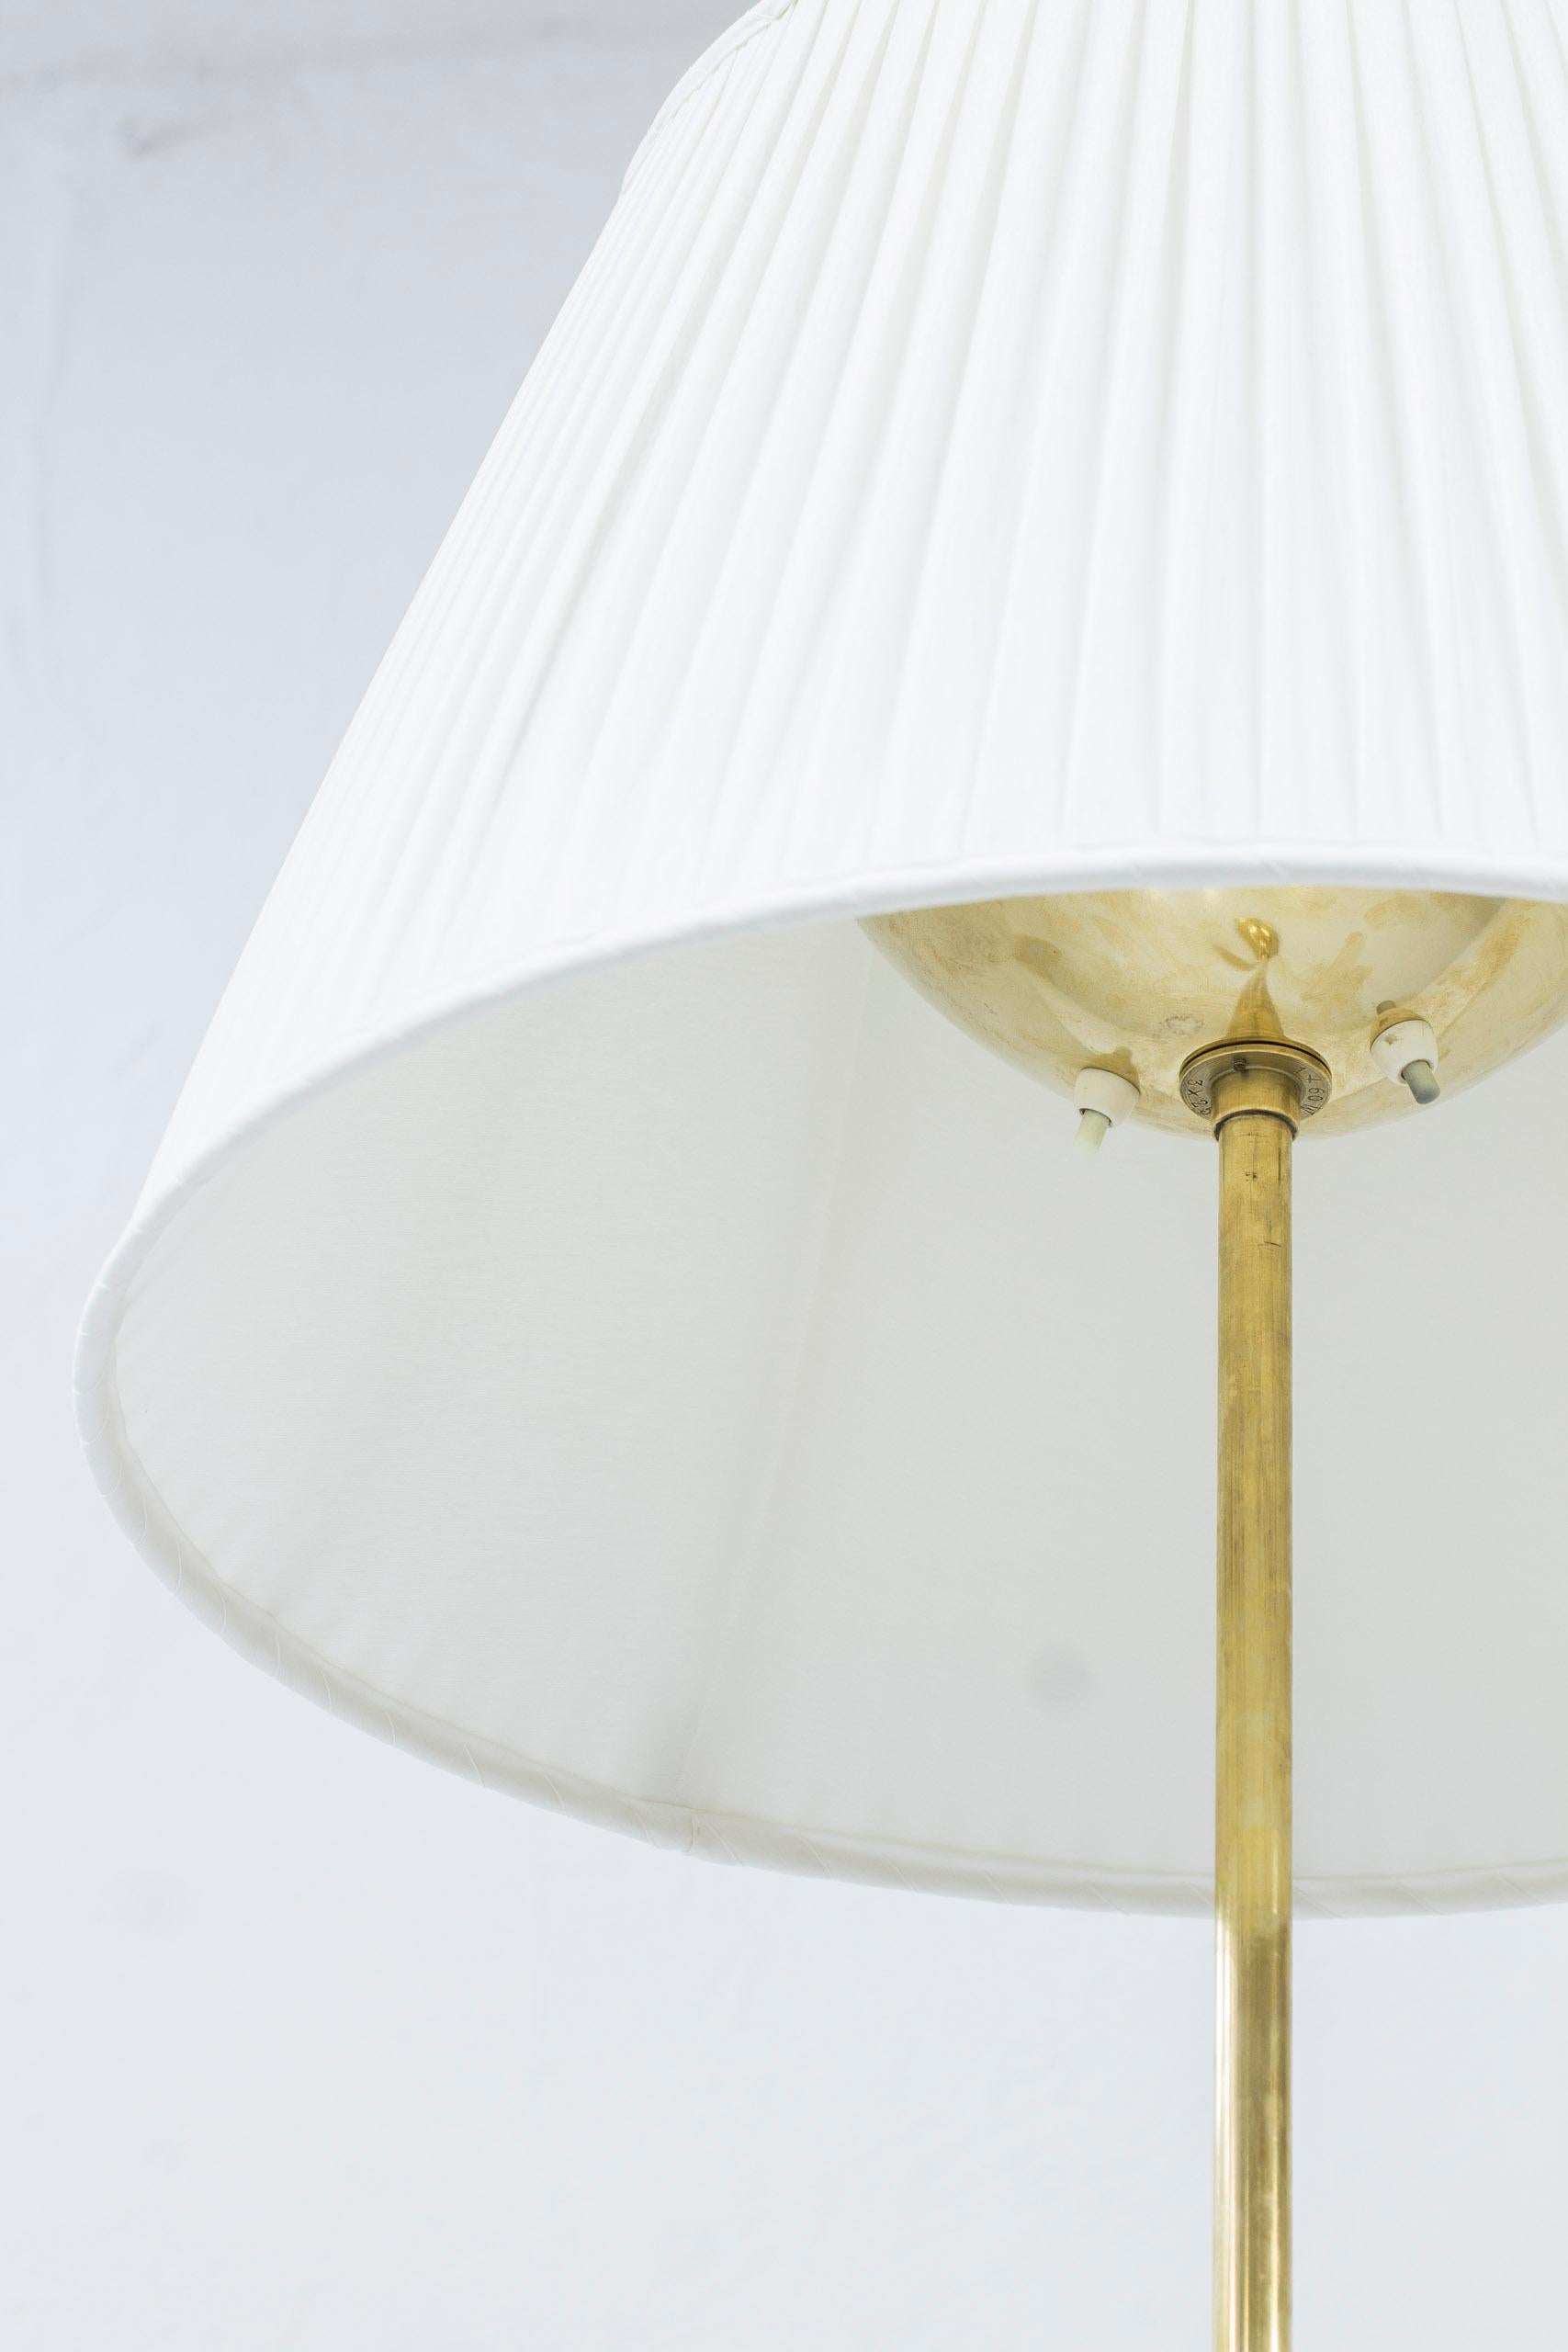 Scandinavian Modern Floor Lamp in Brass by Nordiska Kompaniet and Bertil Brisborg, 1930s For Sale